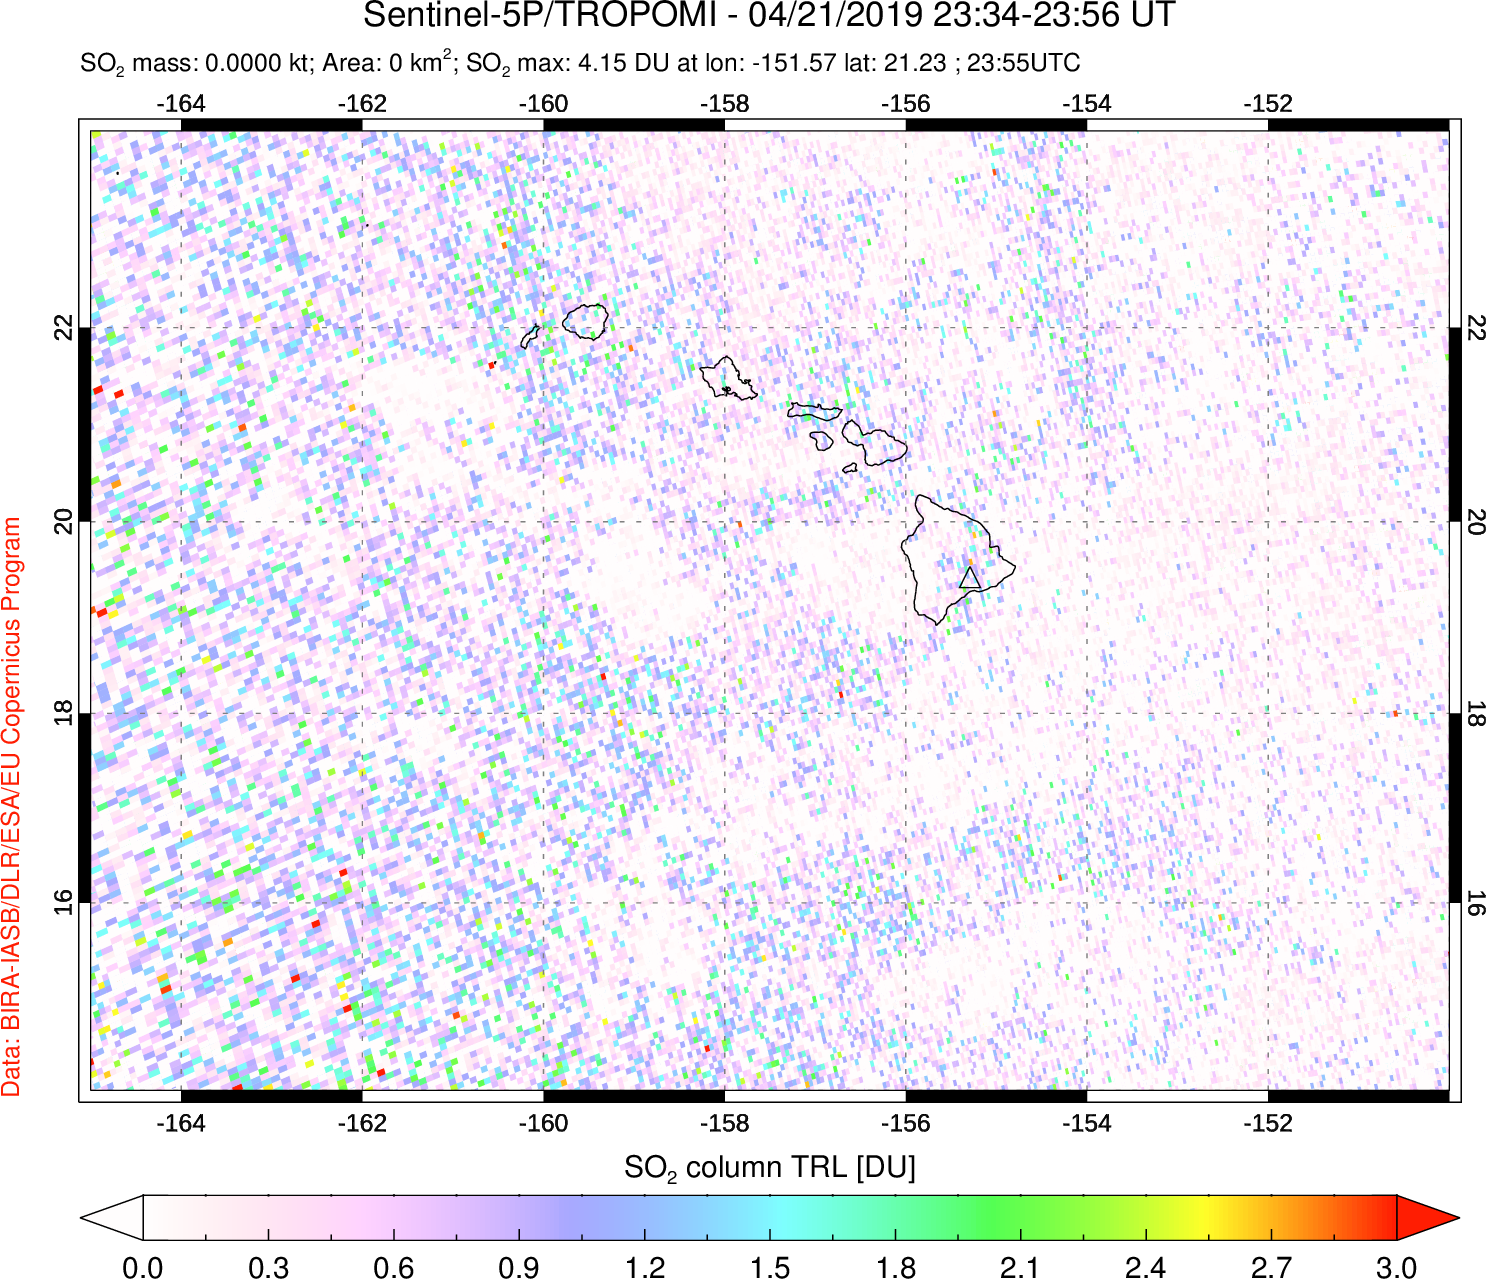 A sulfur dioxide image over Hawaii, USA on Apr 21, 2019.